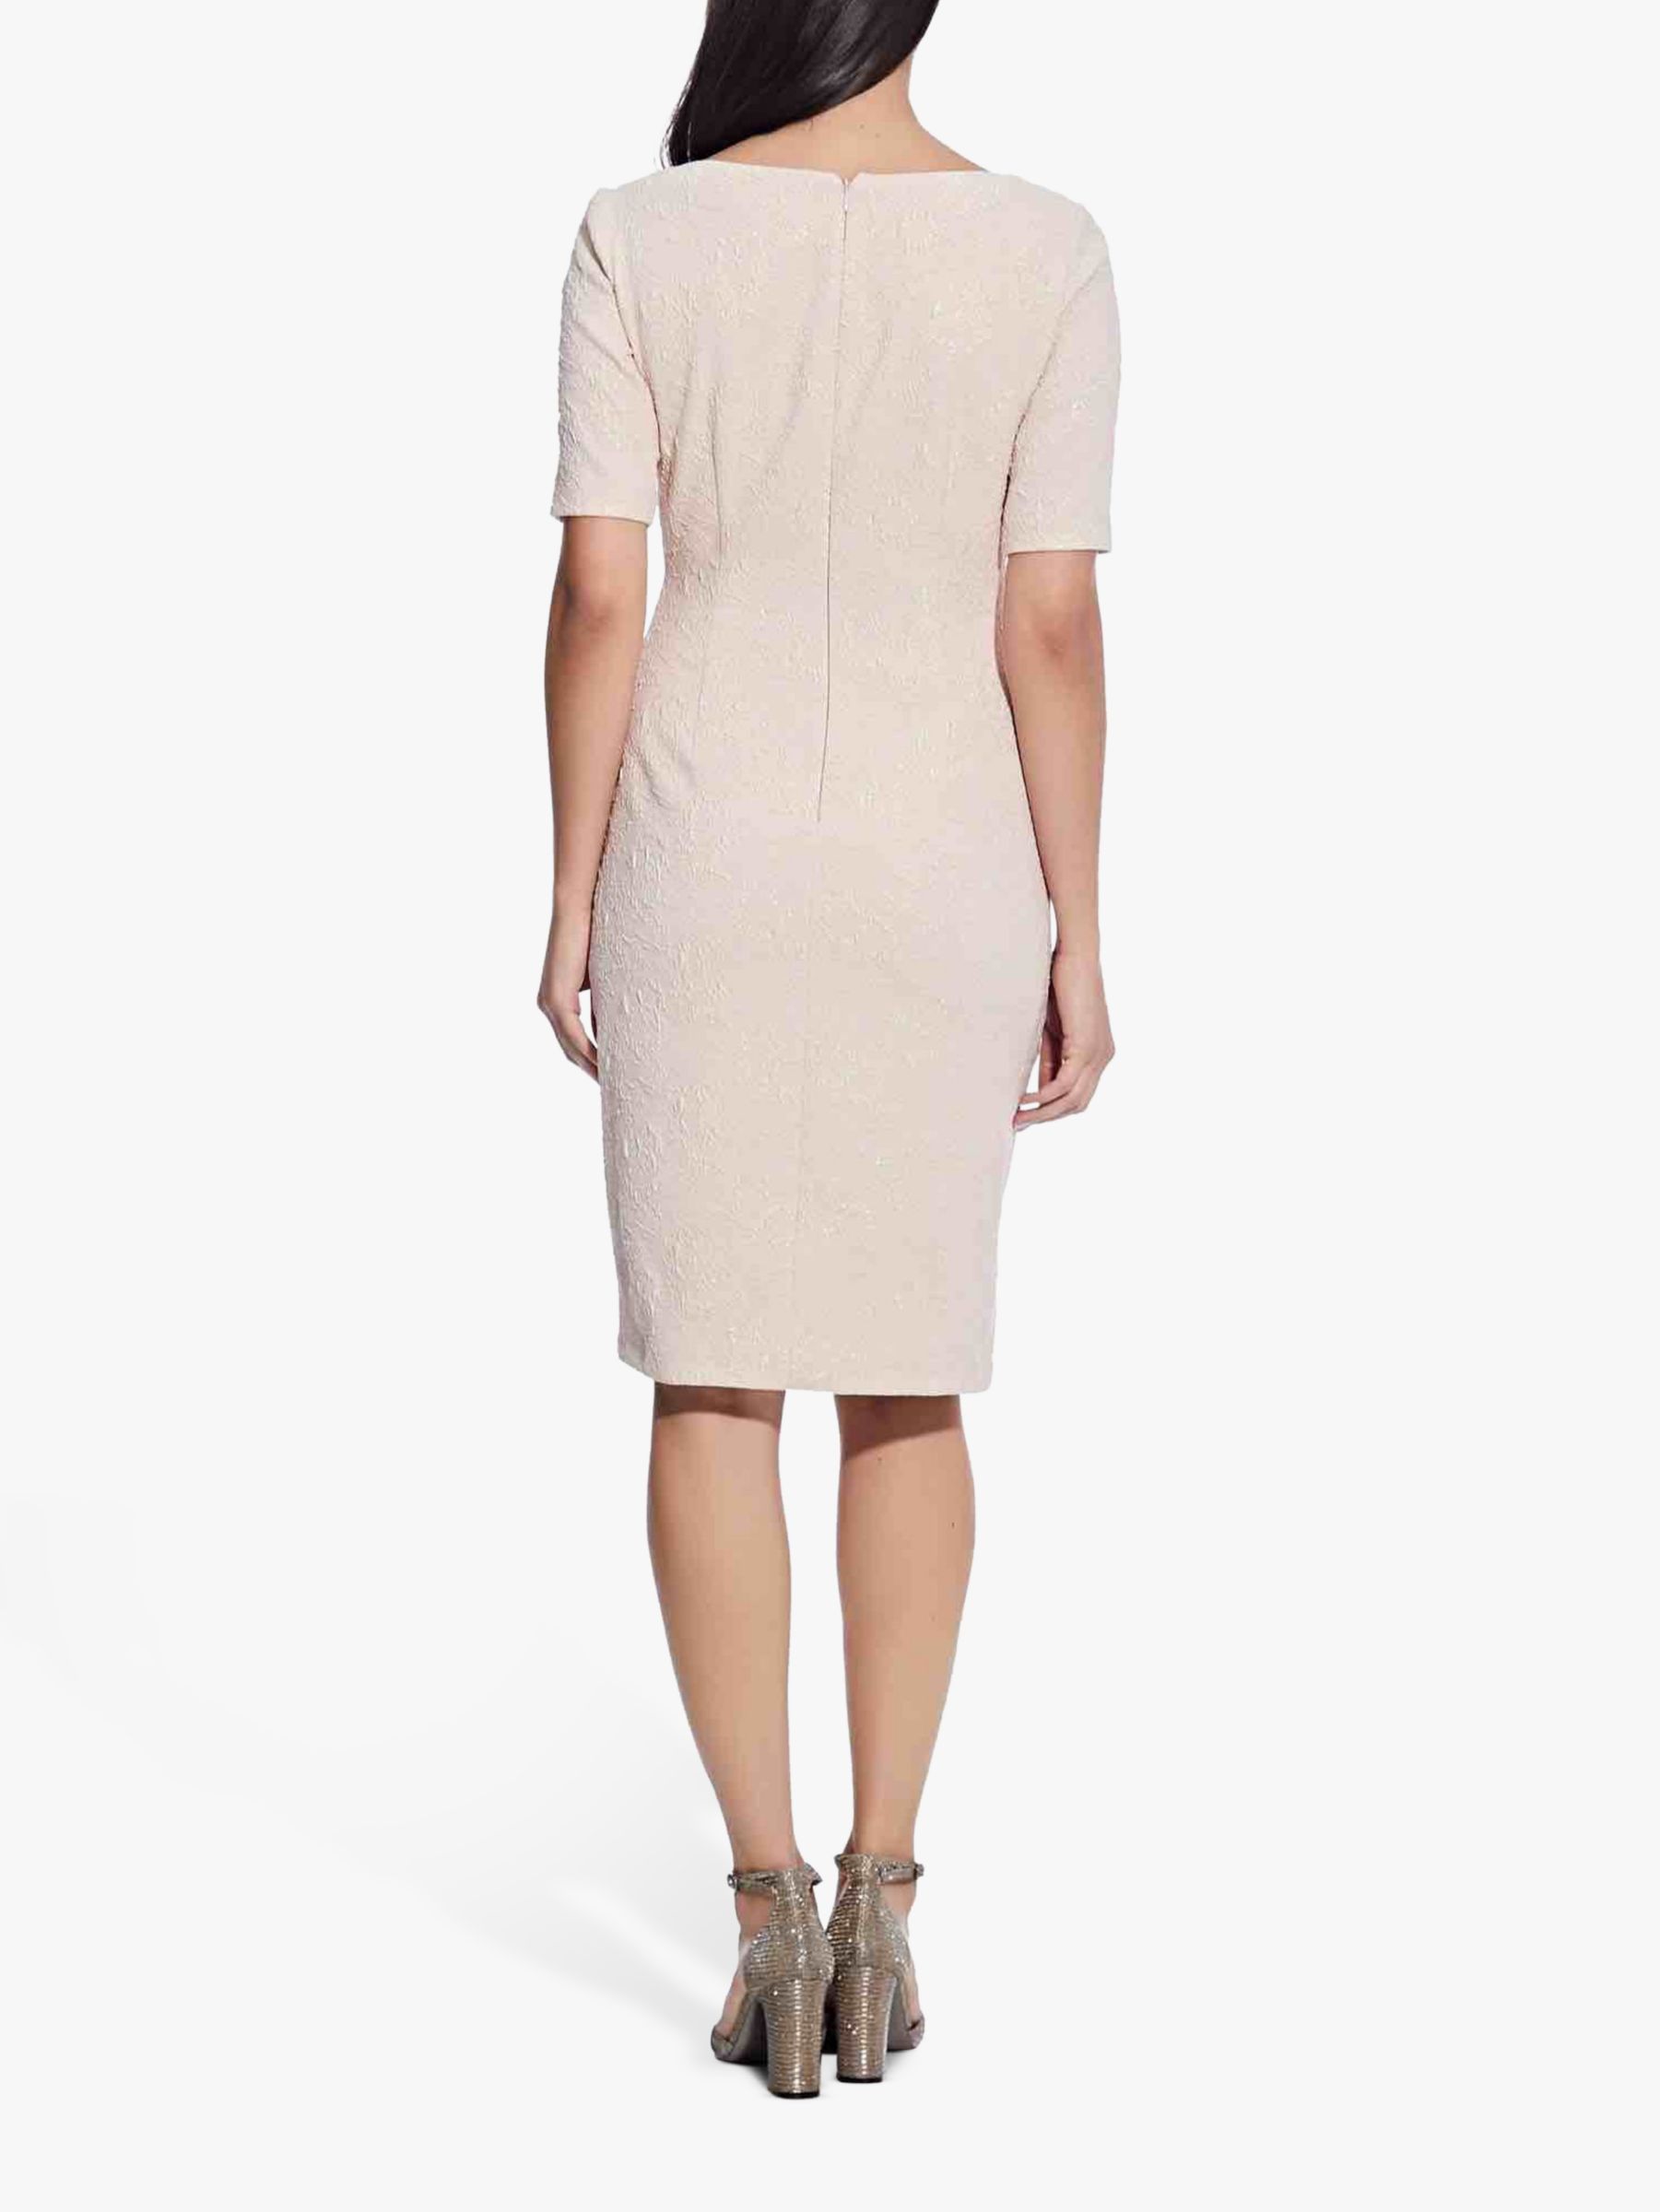 Adrianna Papell Draped Jacquard Dress, Ivory at John Lewis & Partners